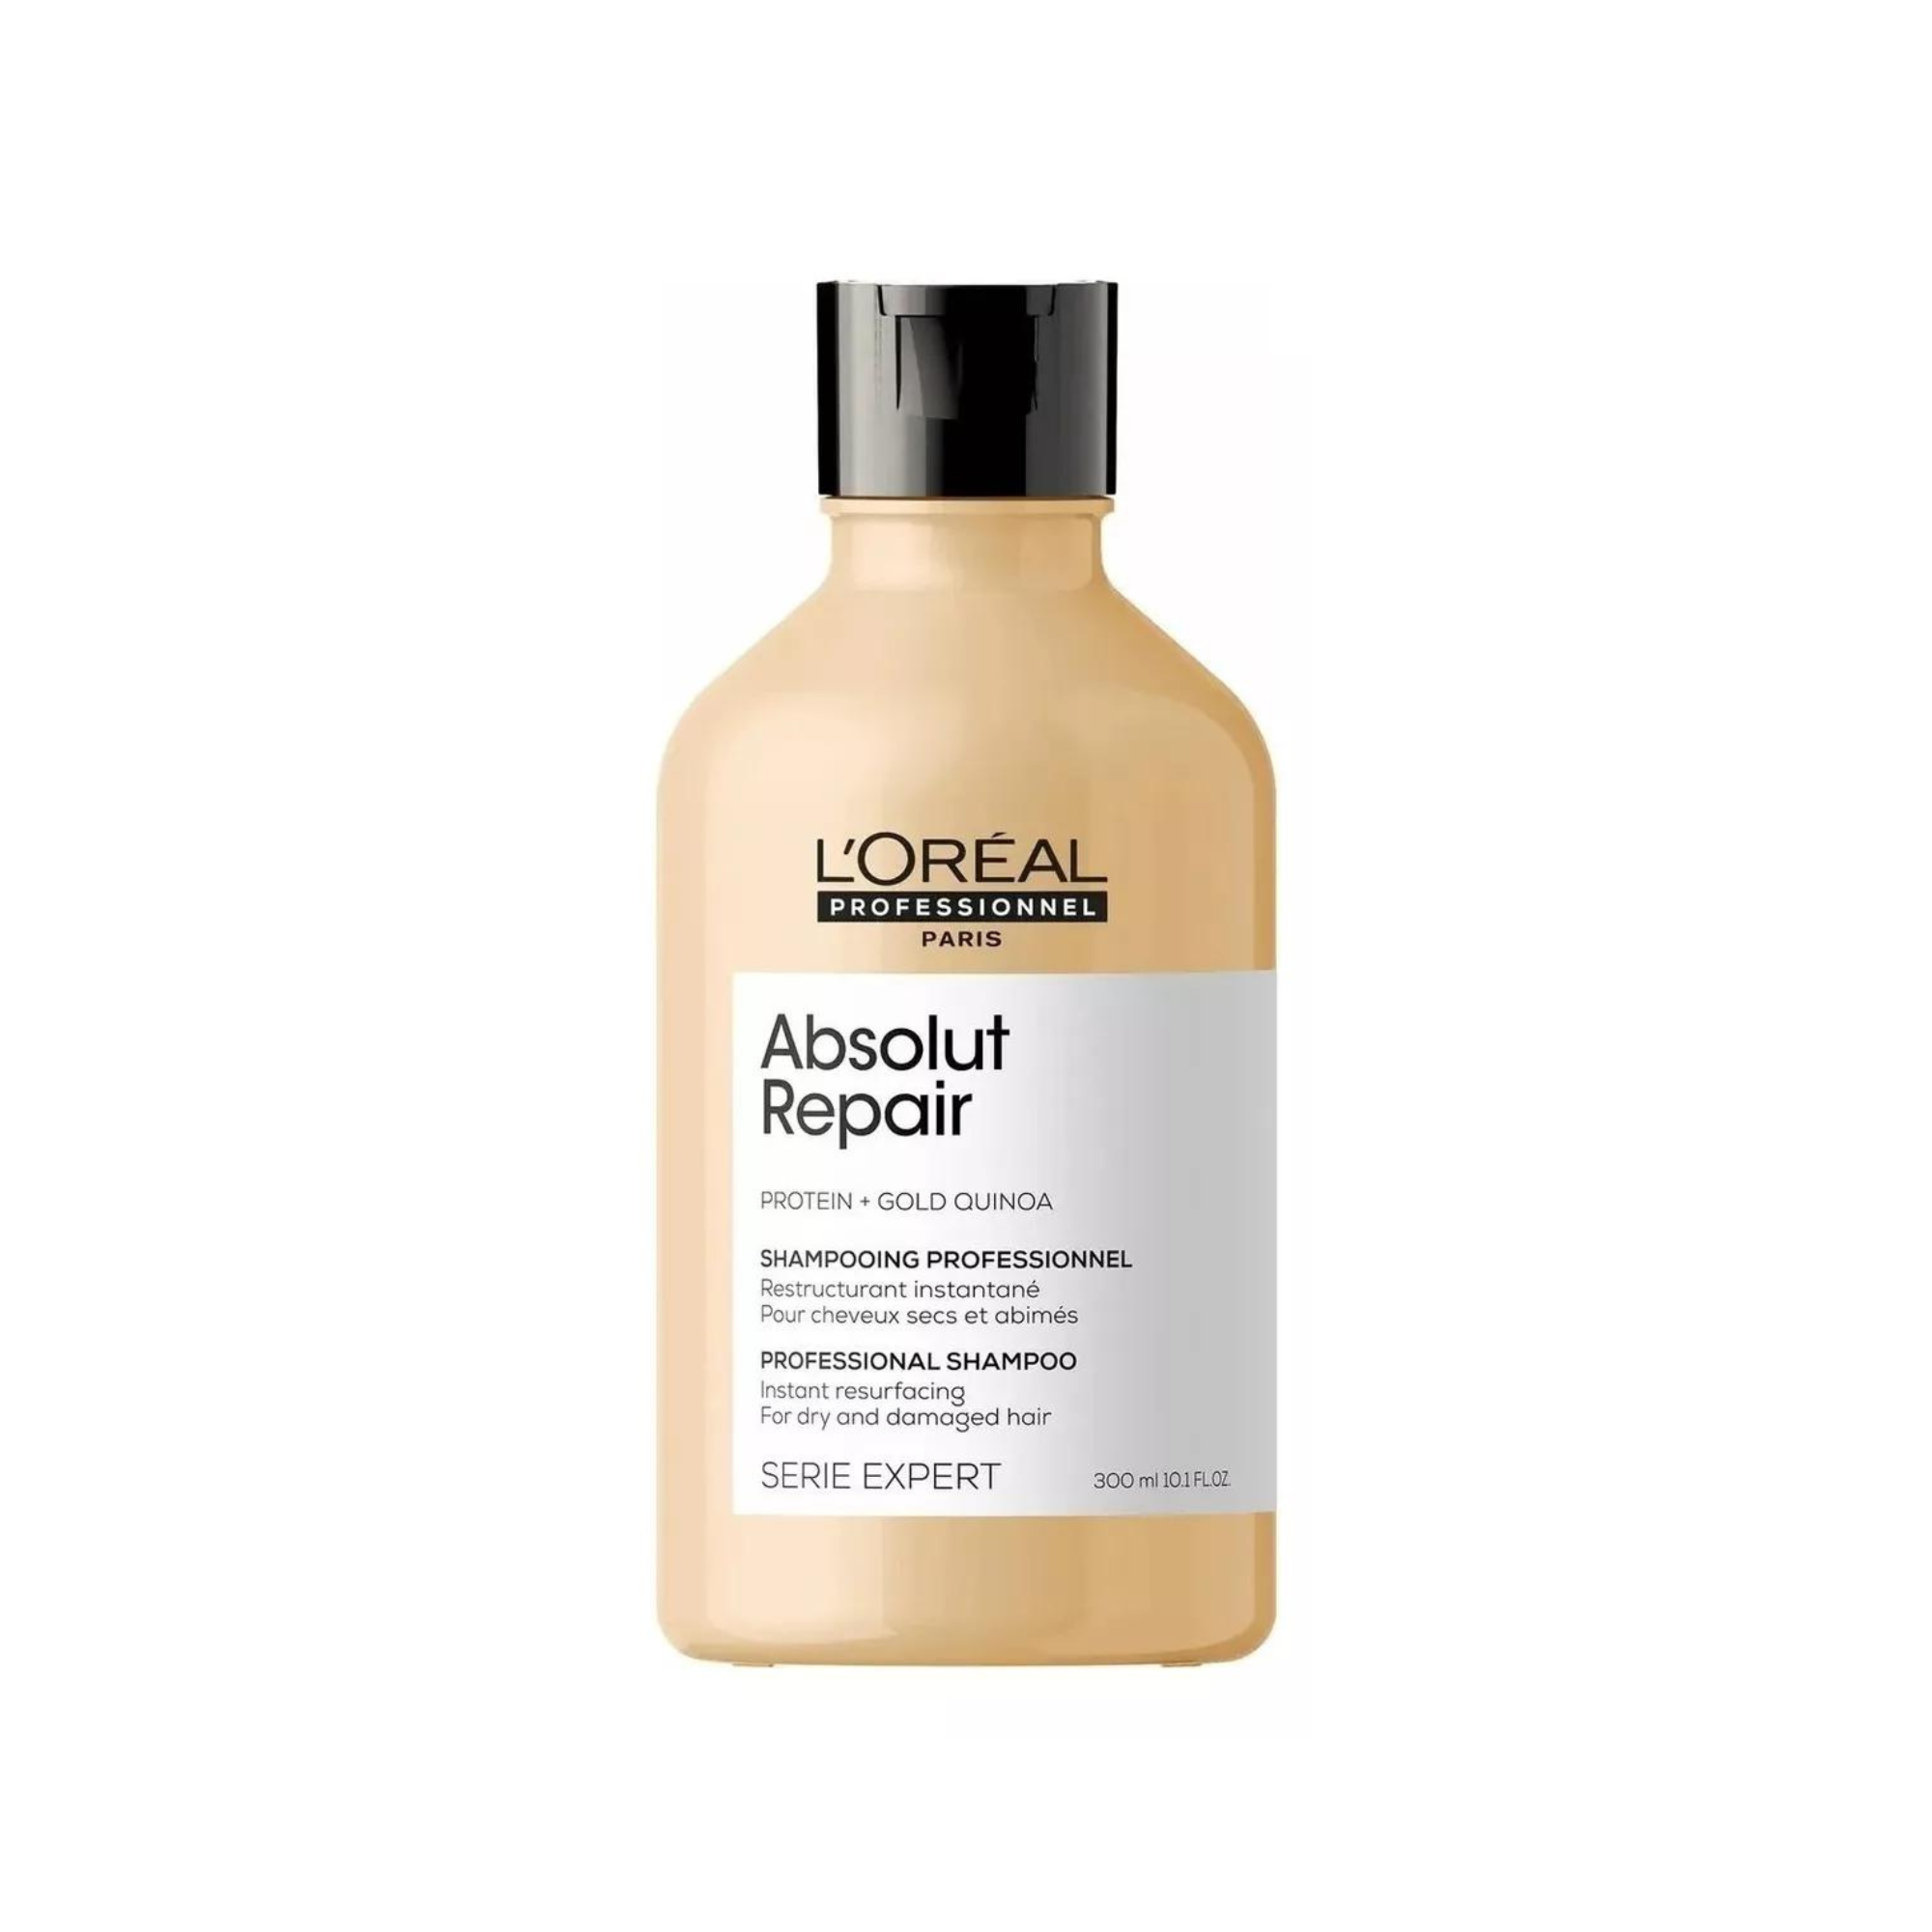 NUEVO Shampoo L'Oreal Absolut Repair Gold Quinoa + Protein (300 ML)